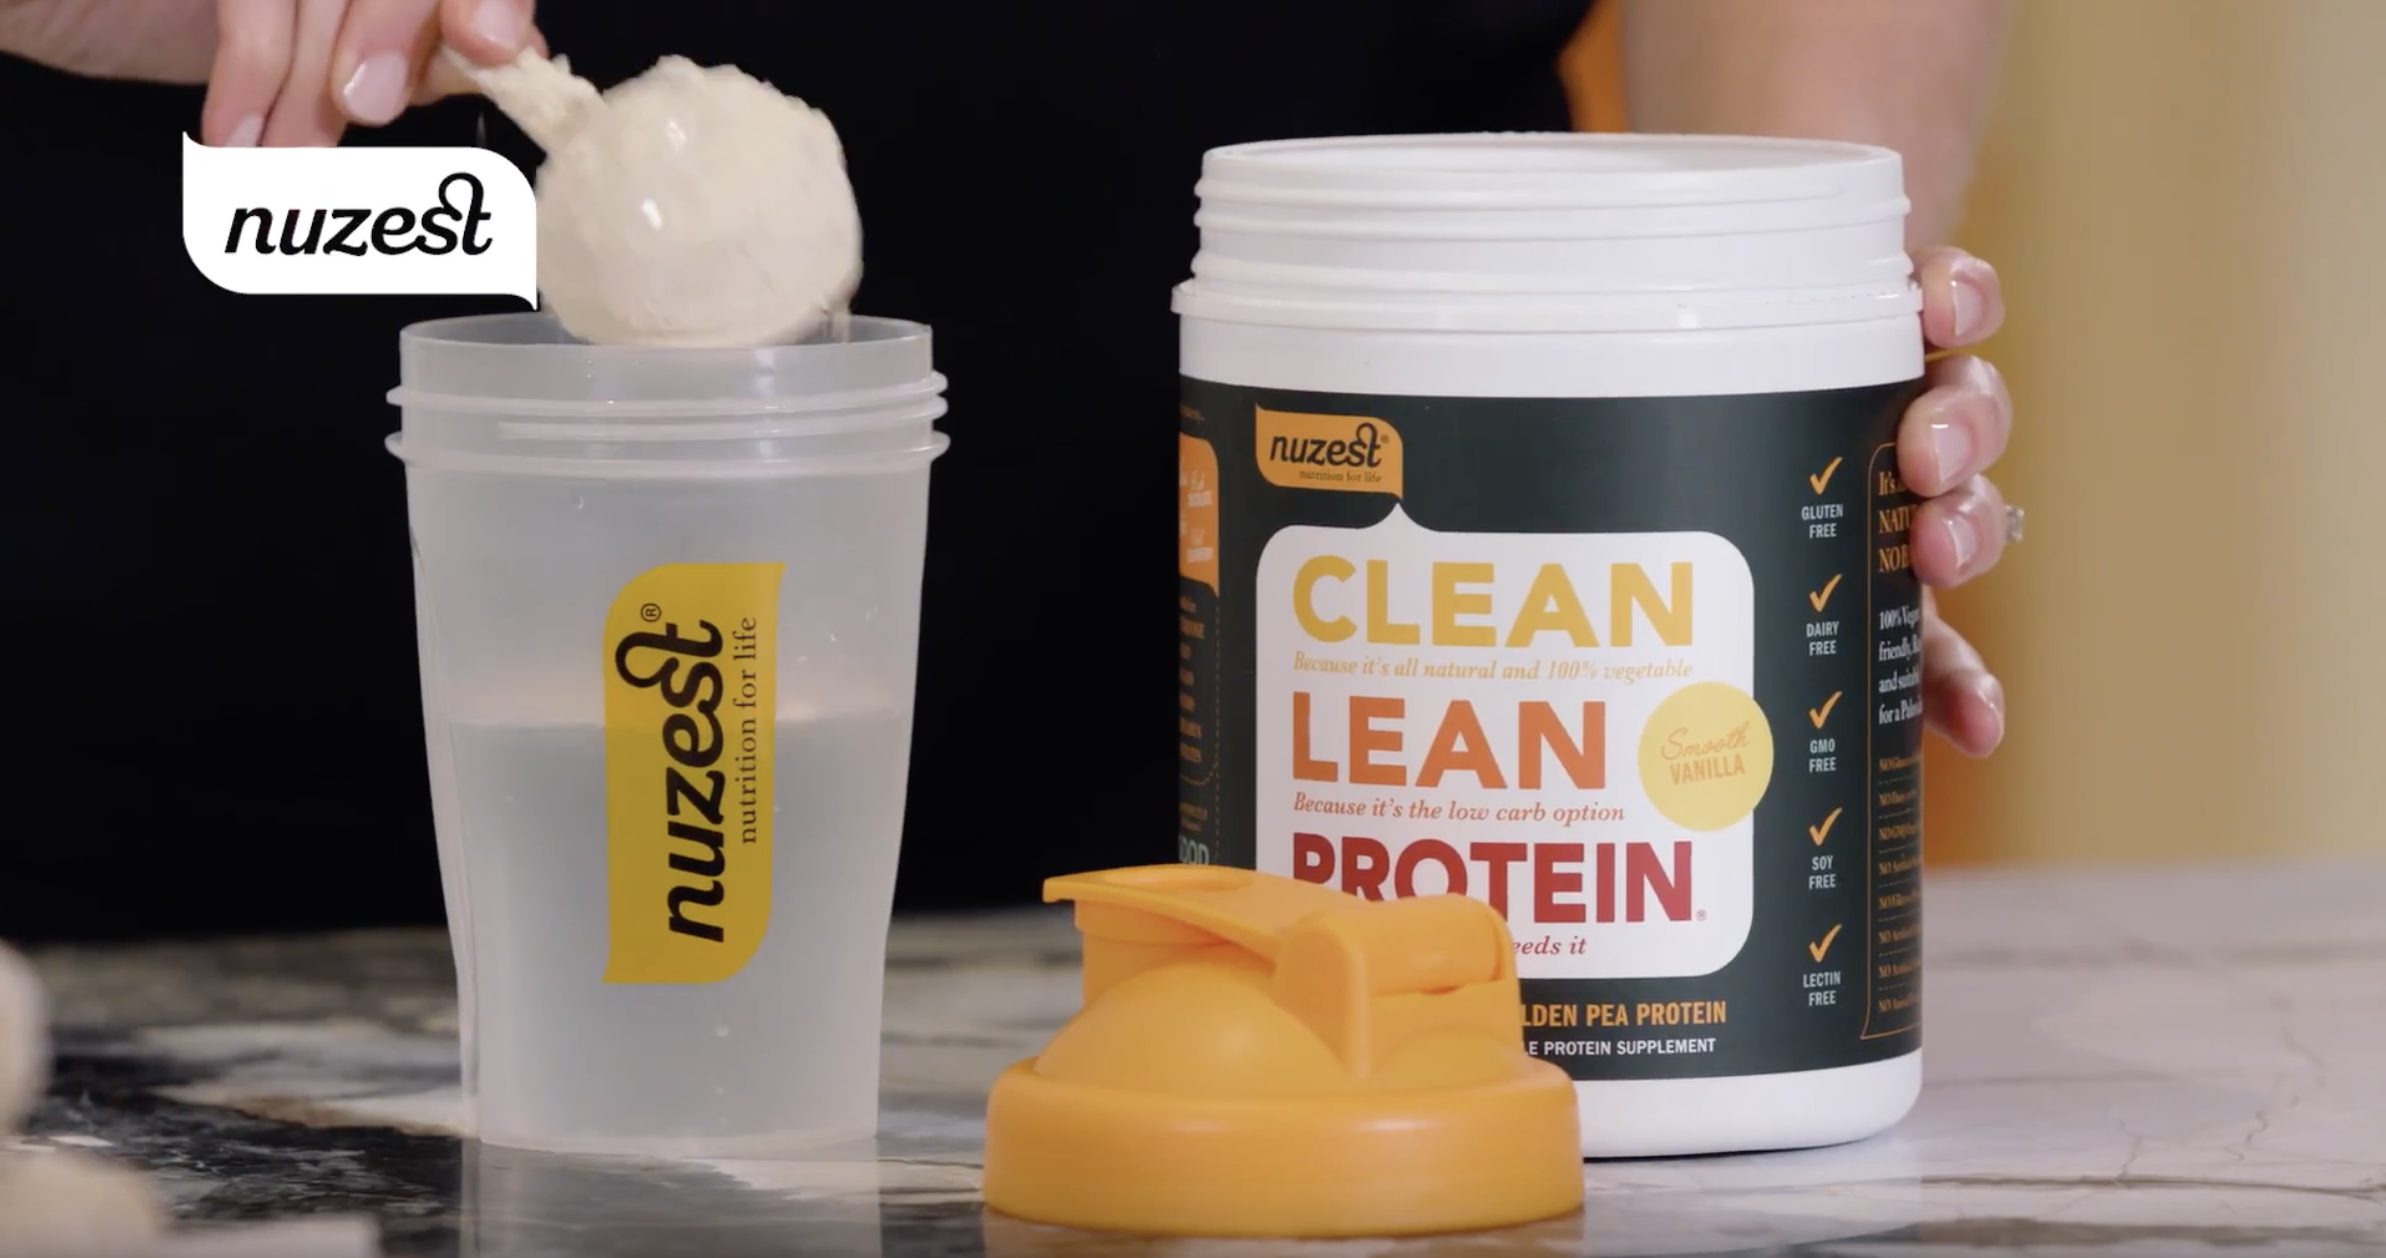 Buy 2 Get 1 Free on Clean Lean Protein Bars